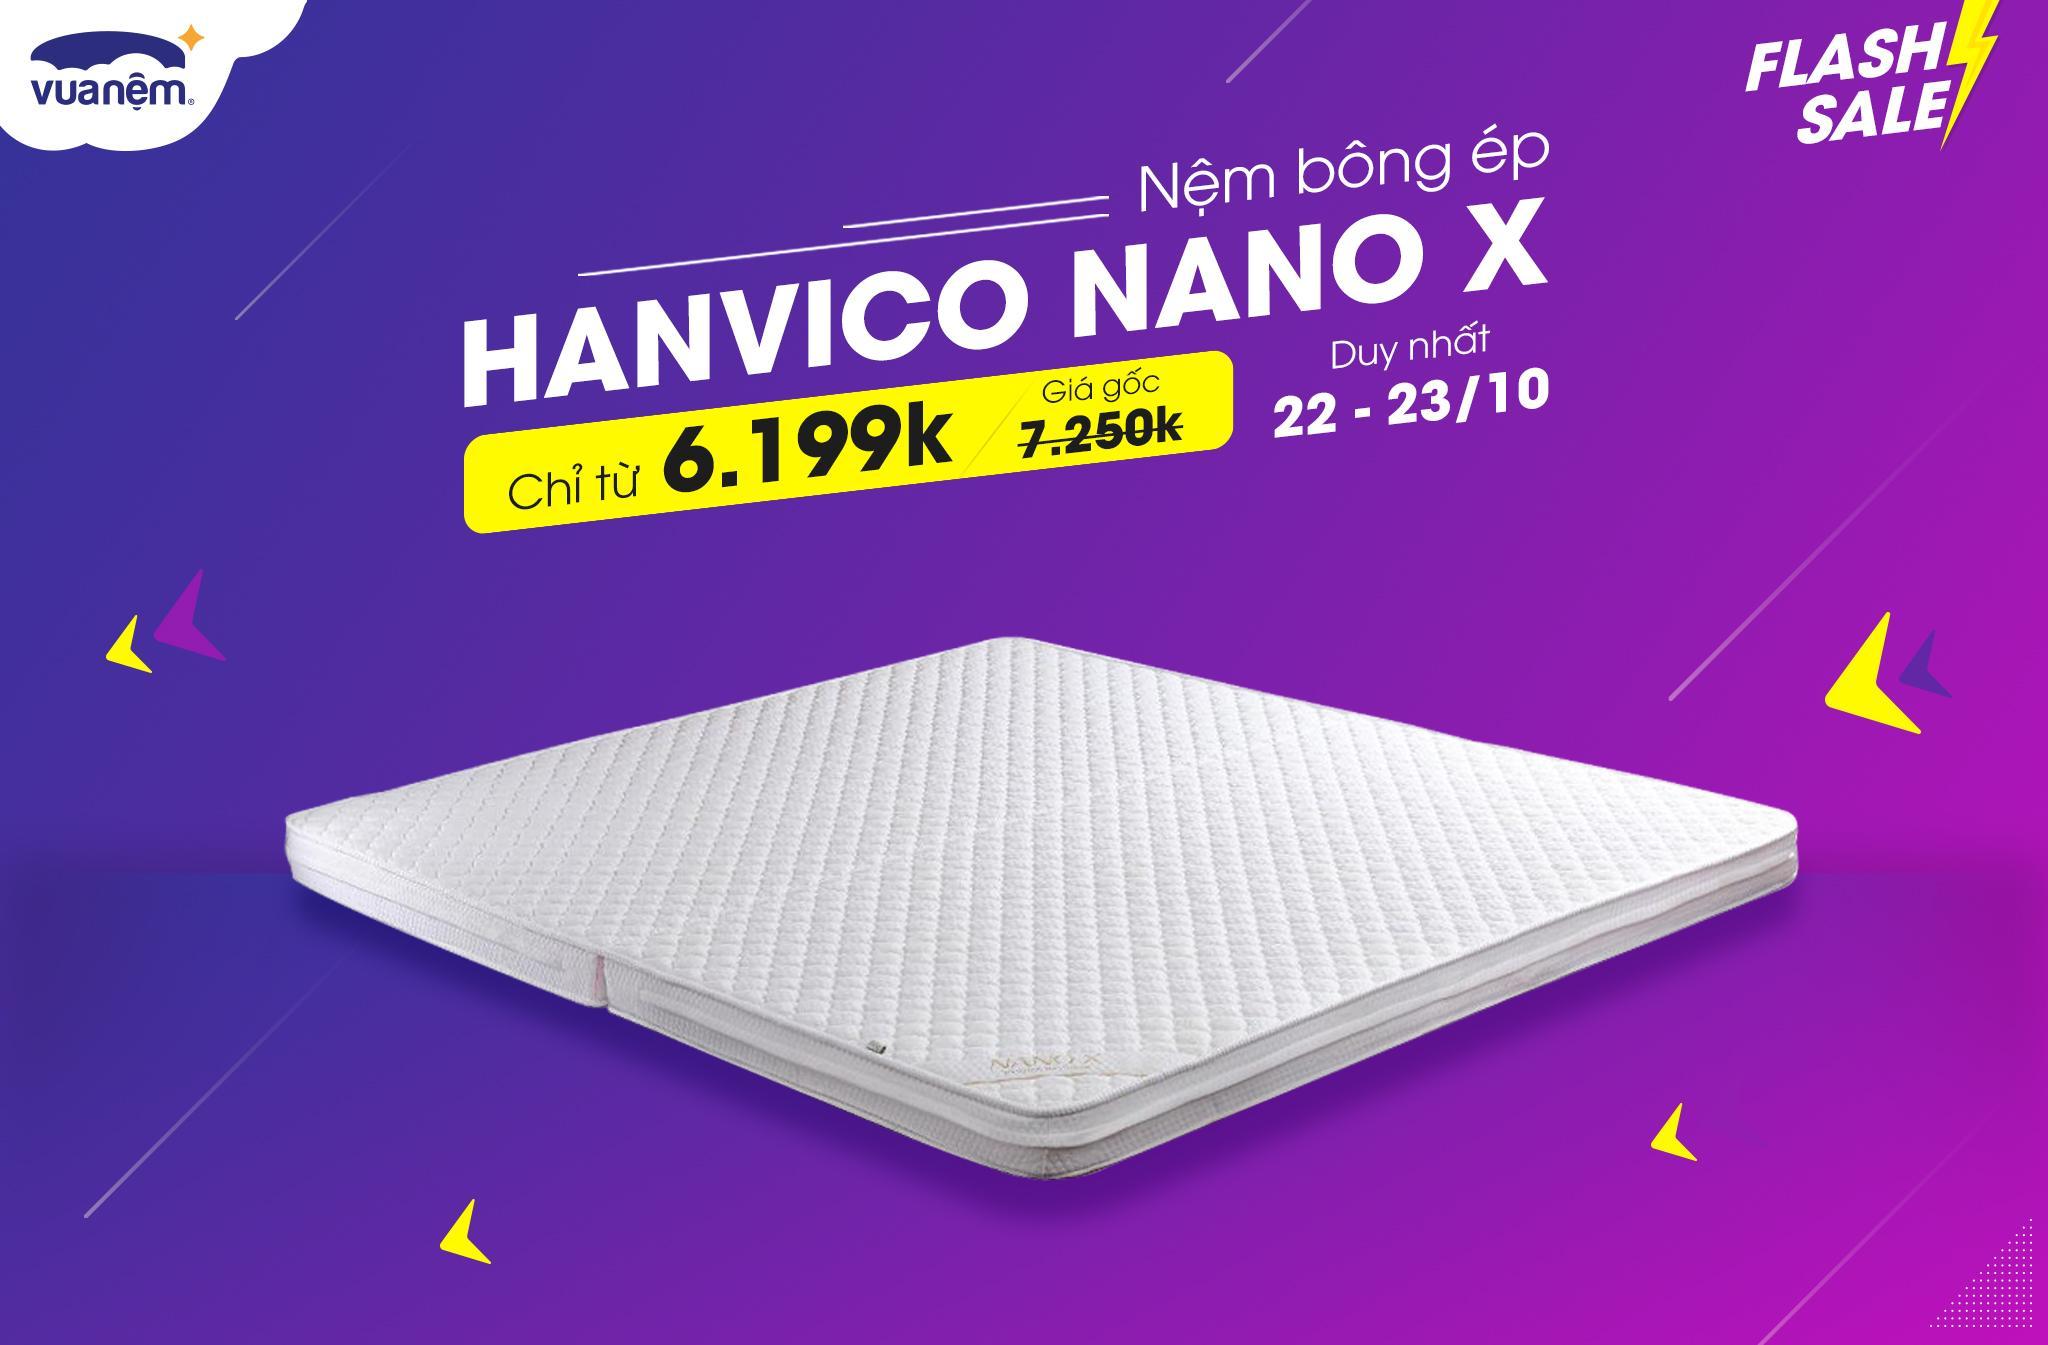 Vua nệm - Hanvico Nano X 22  23.10.jpg